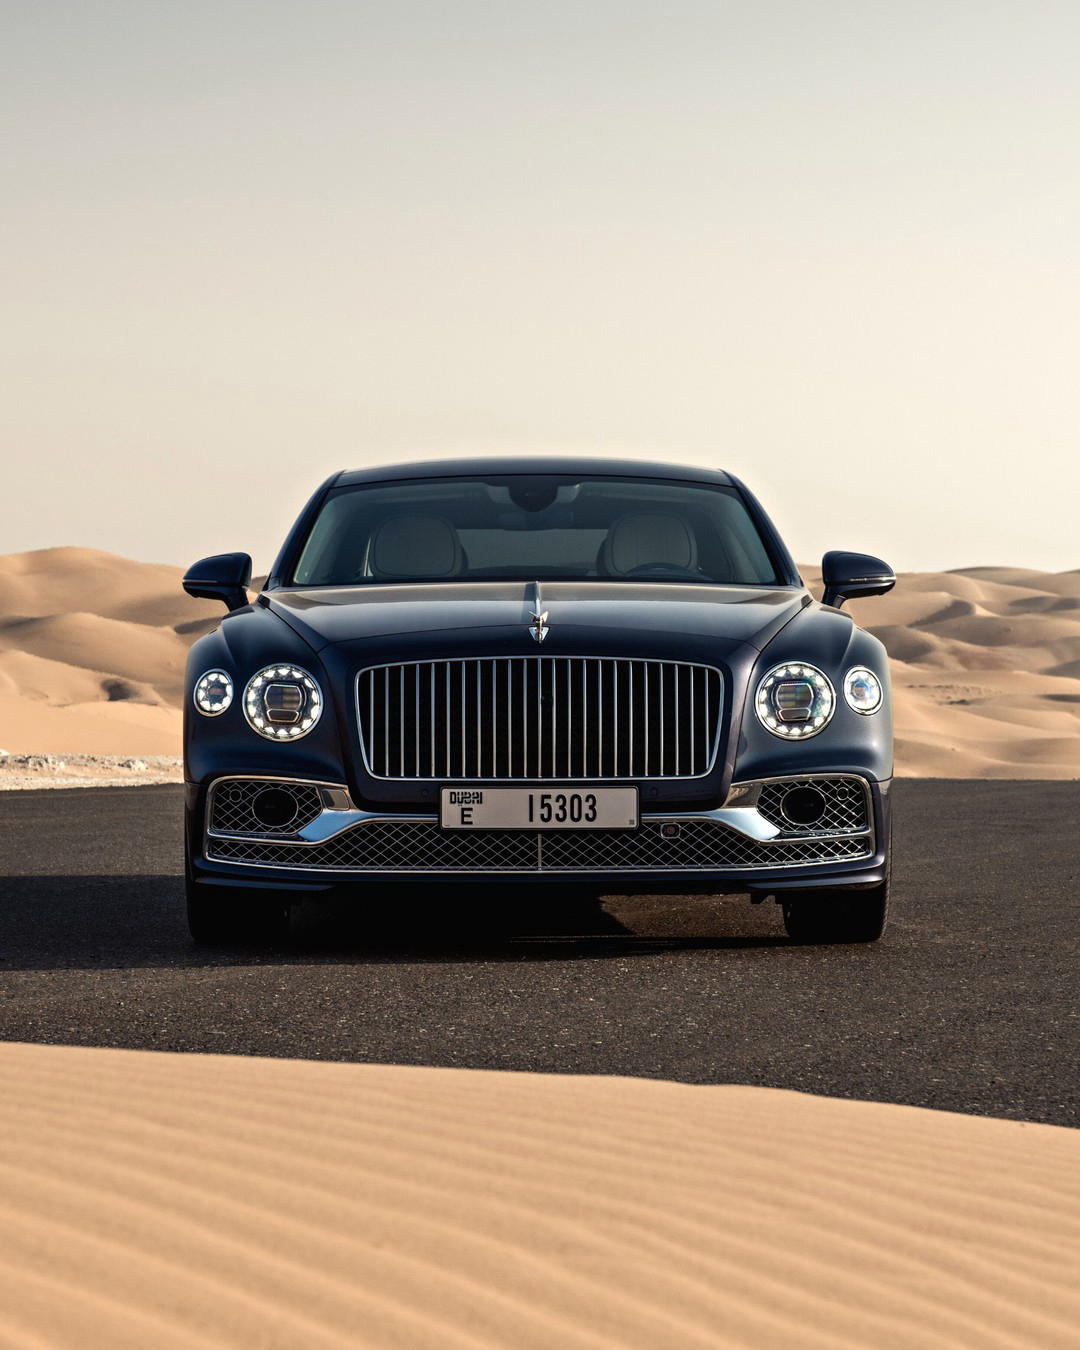 Bentley Motors - Describe that reaction when you spot a Bentley in the wild